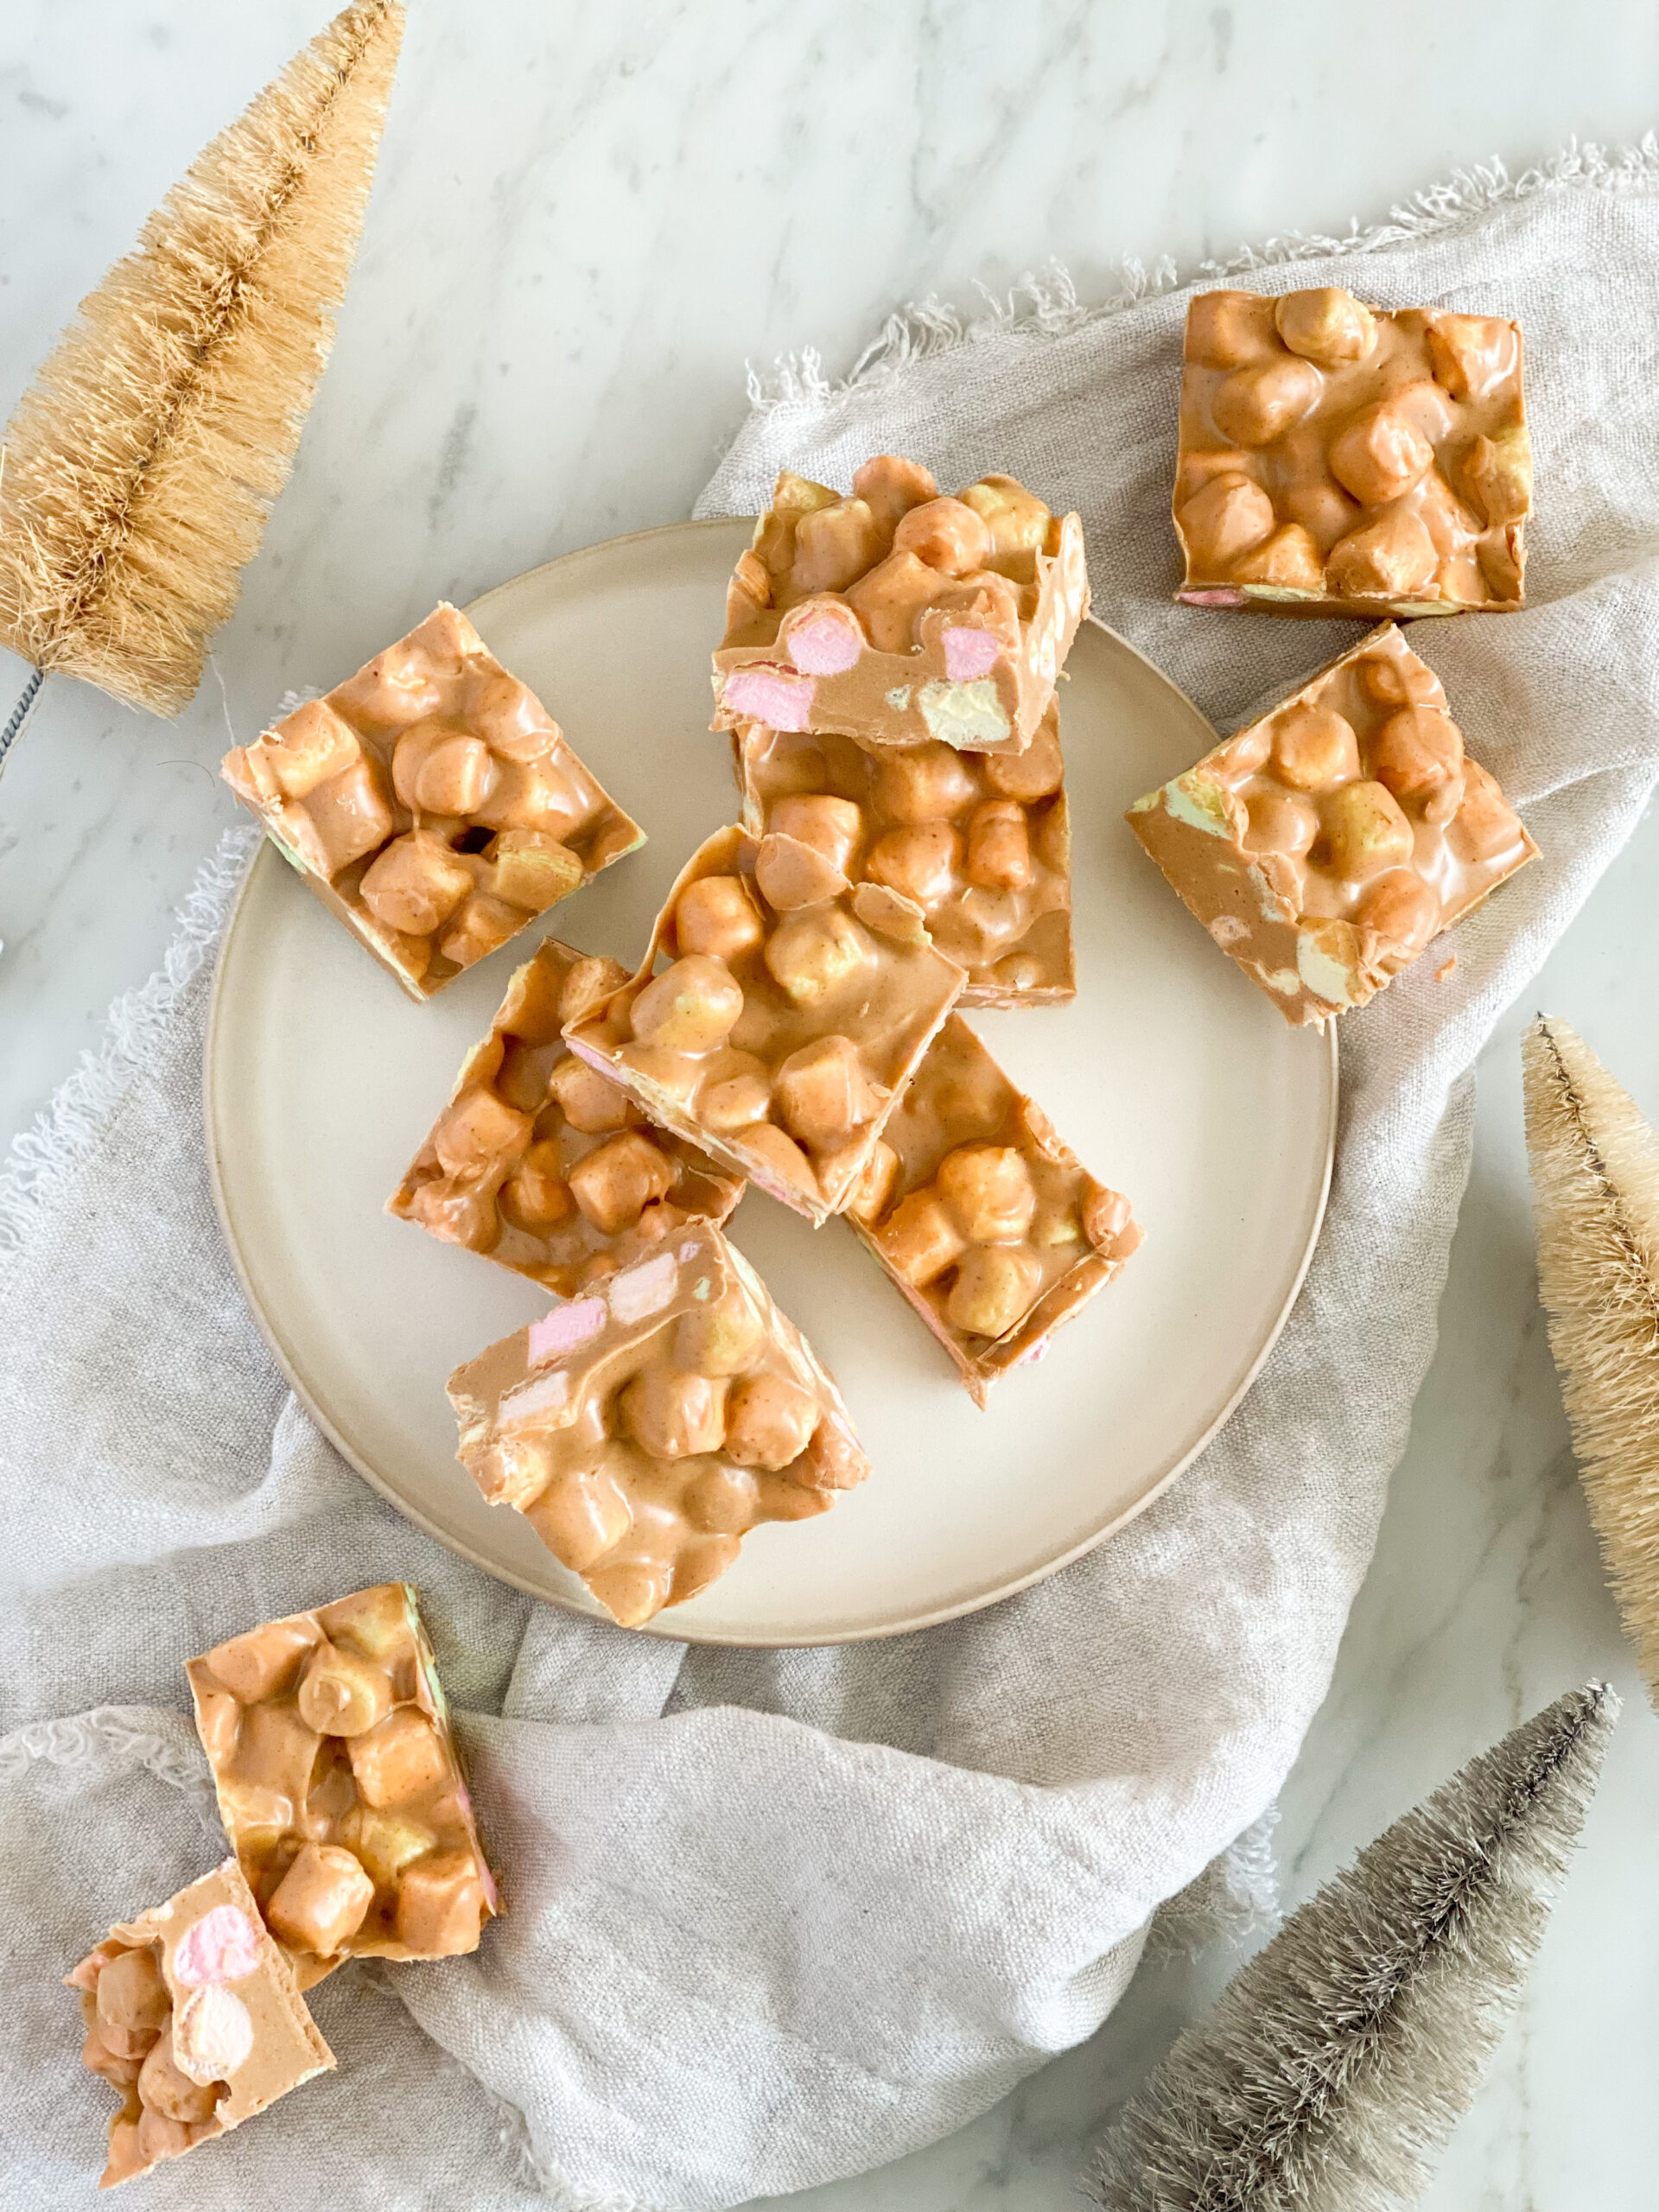 peanut butter marshmallow squares